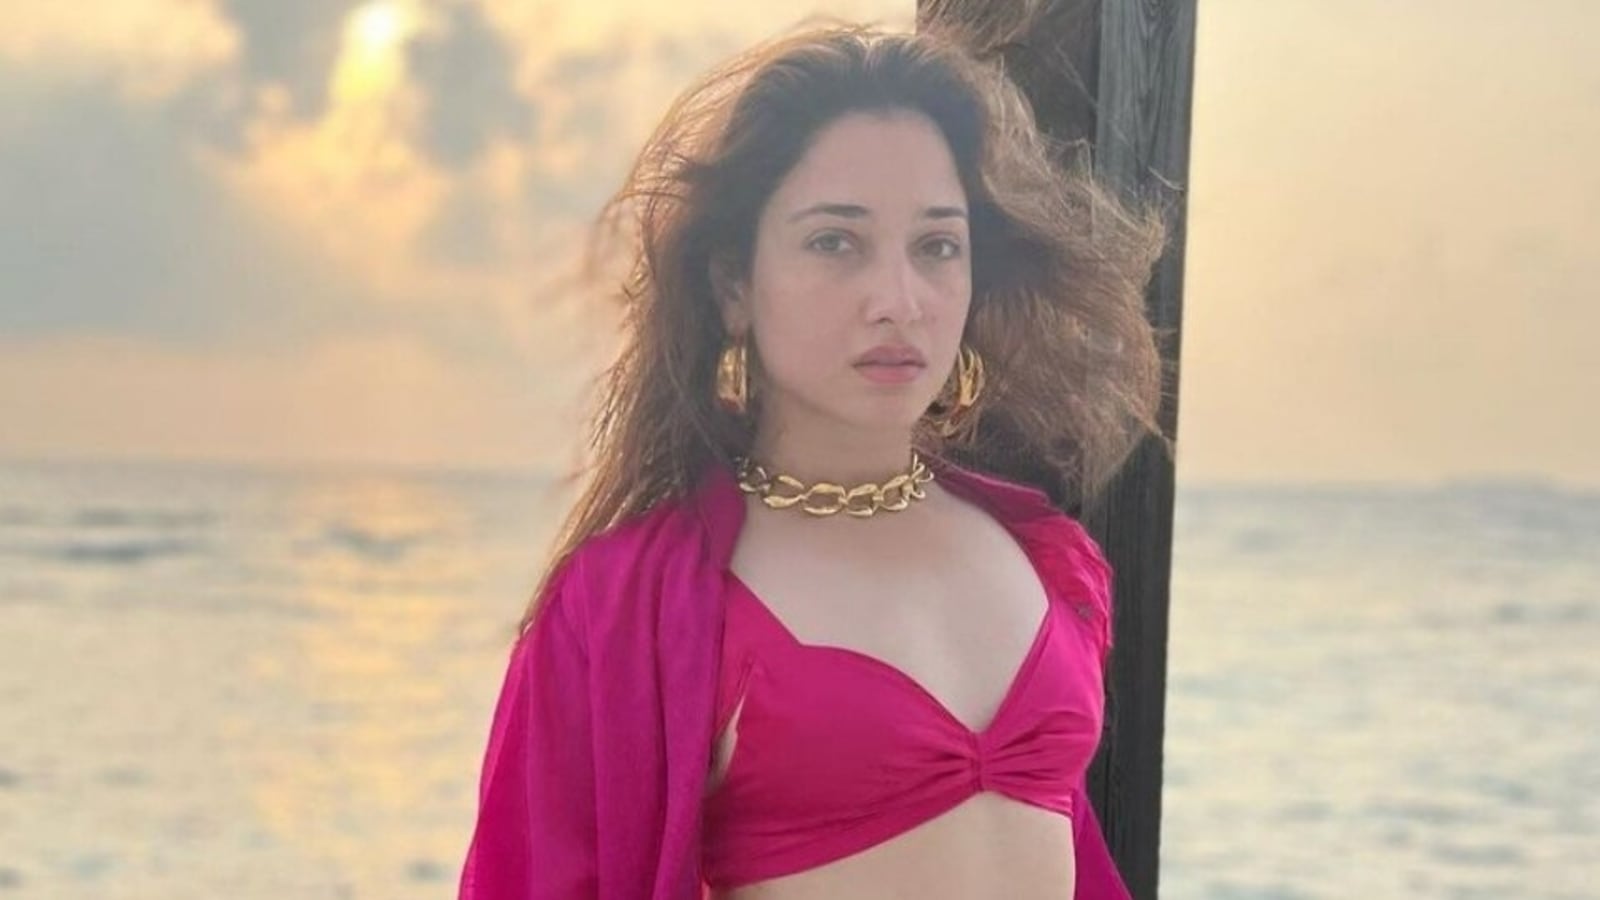 Tamanna Real Sex Videos Hd - Tamannaah Bhatia in bikini top and shorts wanders beaches in Maldives |  Fashion Trends - Hindustan Times